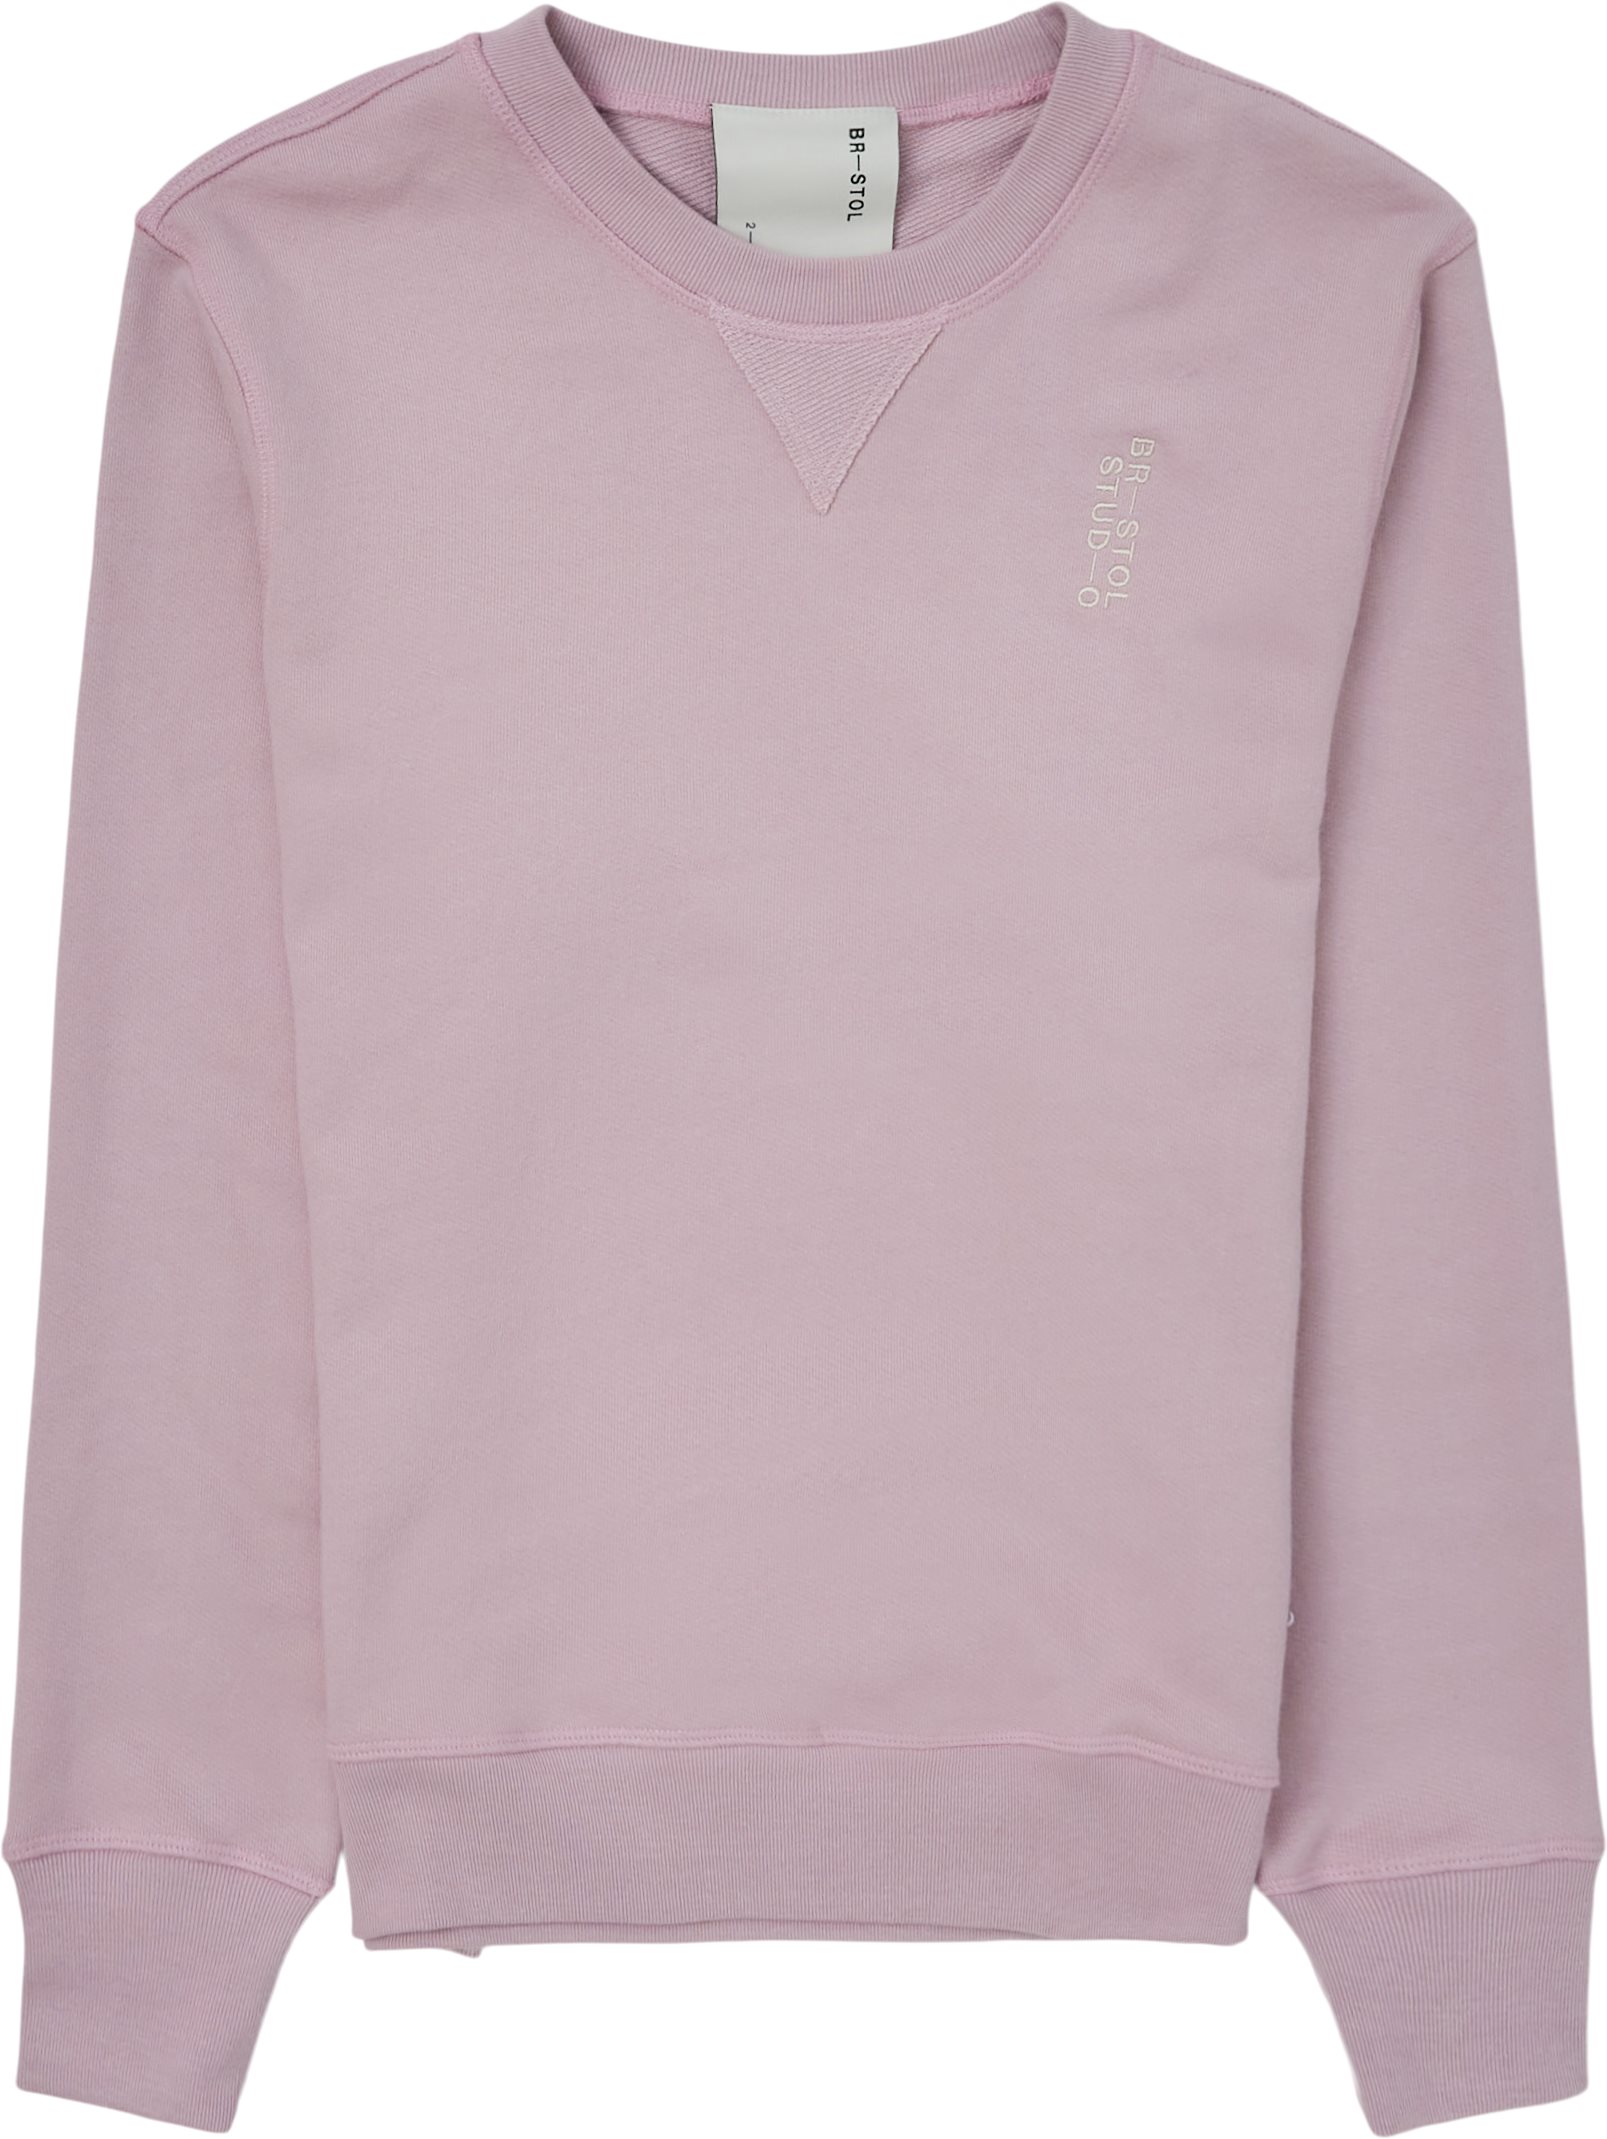 Signature Crewneck - Sweatshirts - Oversize fit - Lilac